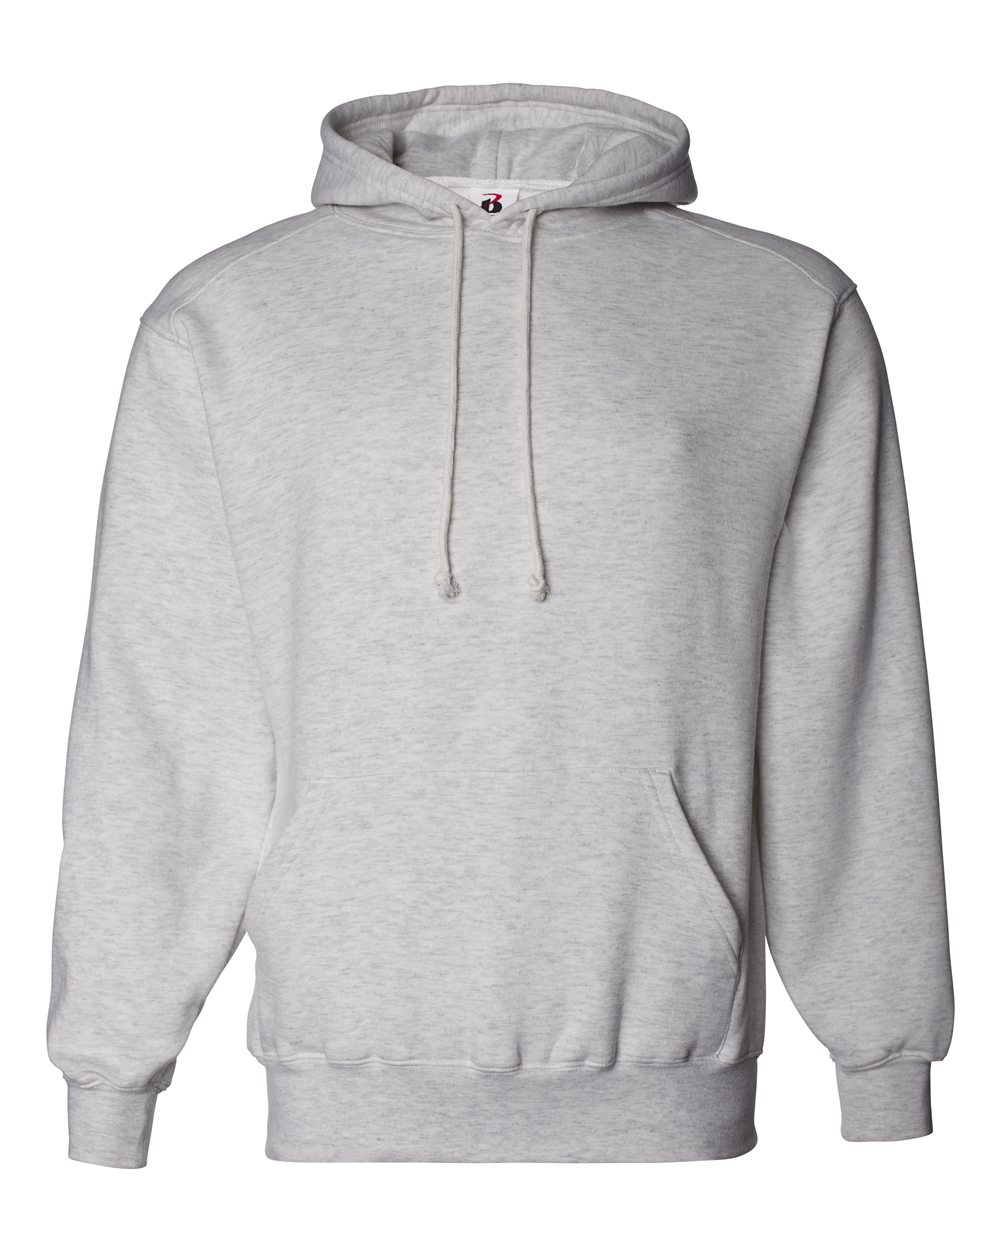 Badger Mens Heavy Blend Blank Hooded Sweatshirt 1254 up to 4XL | eBay